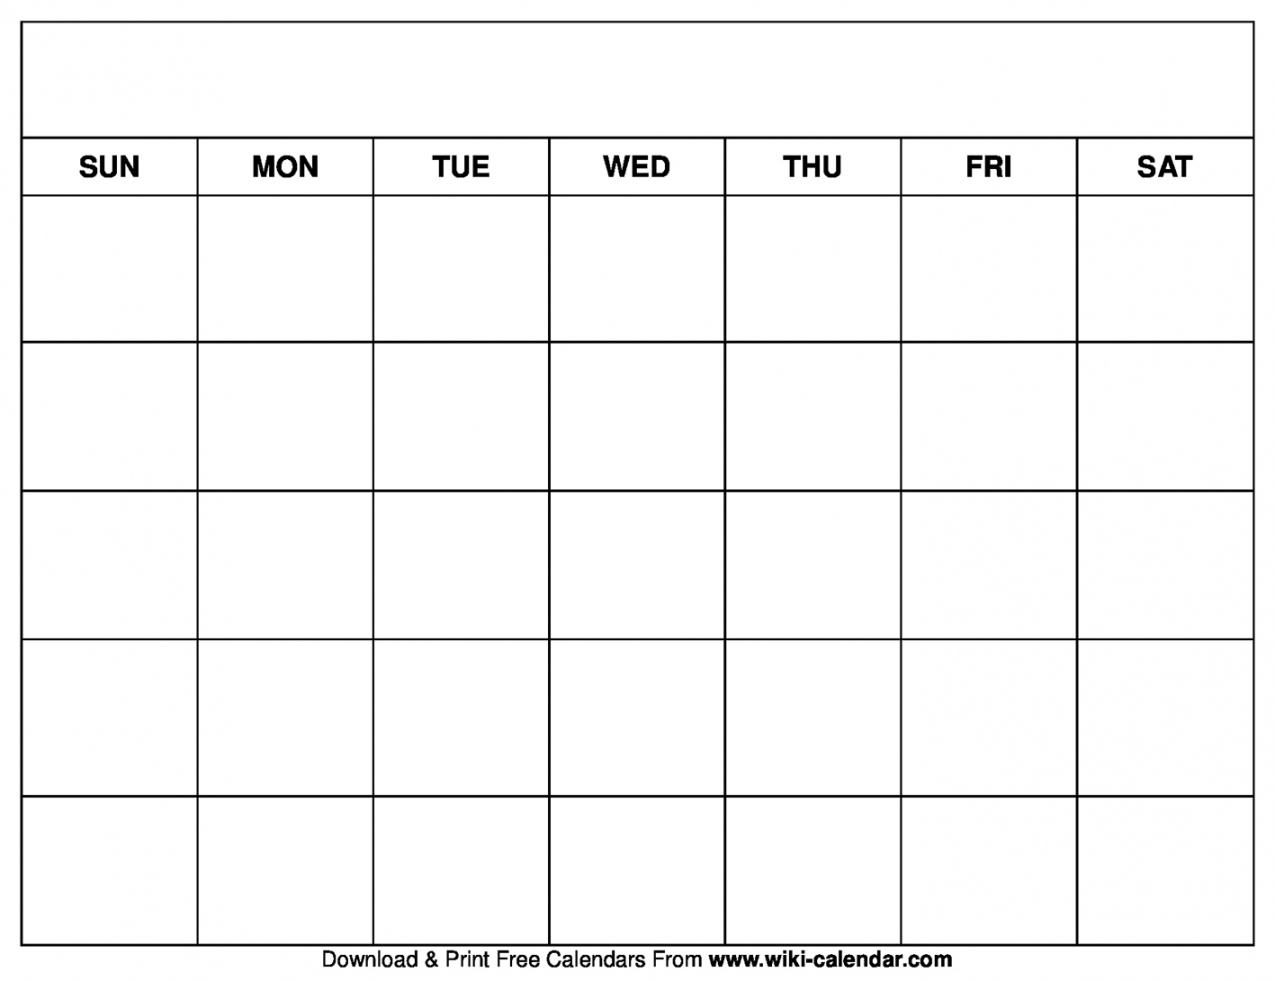 Free Printable Calendar Blank - Printable - Printable Blank Calendar Templates - Wiki Calendar